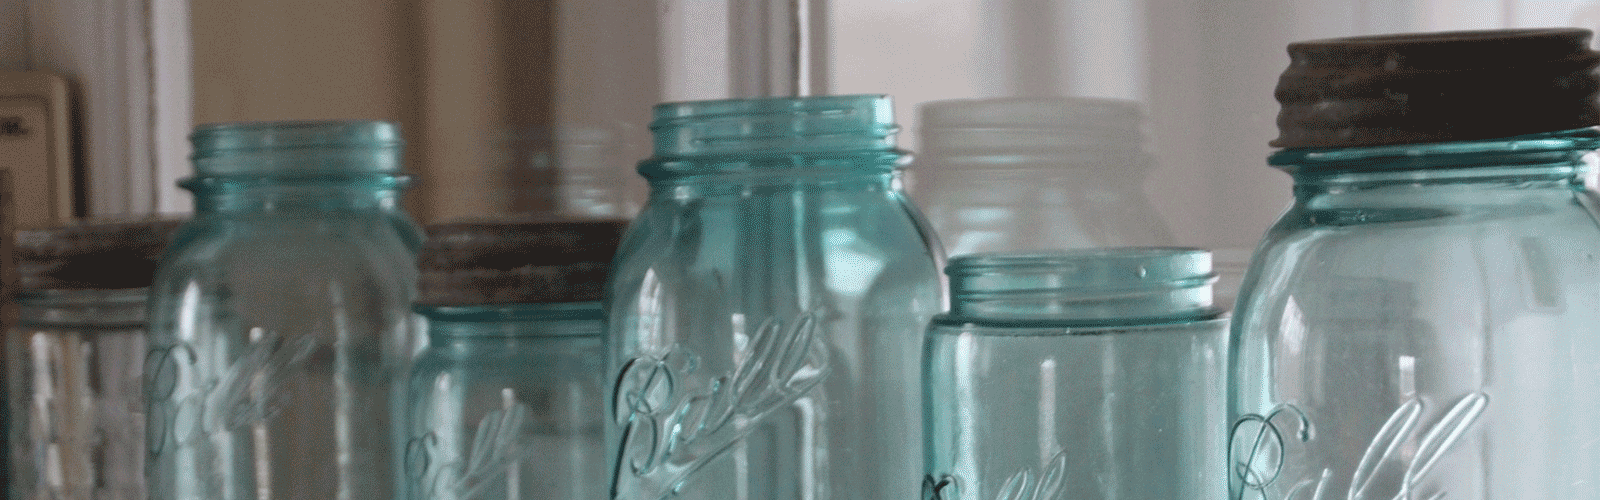 Image of mason jars on a shelf